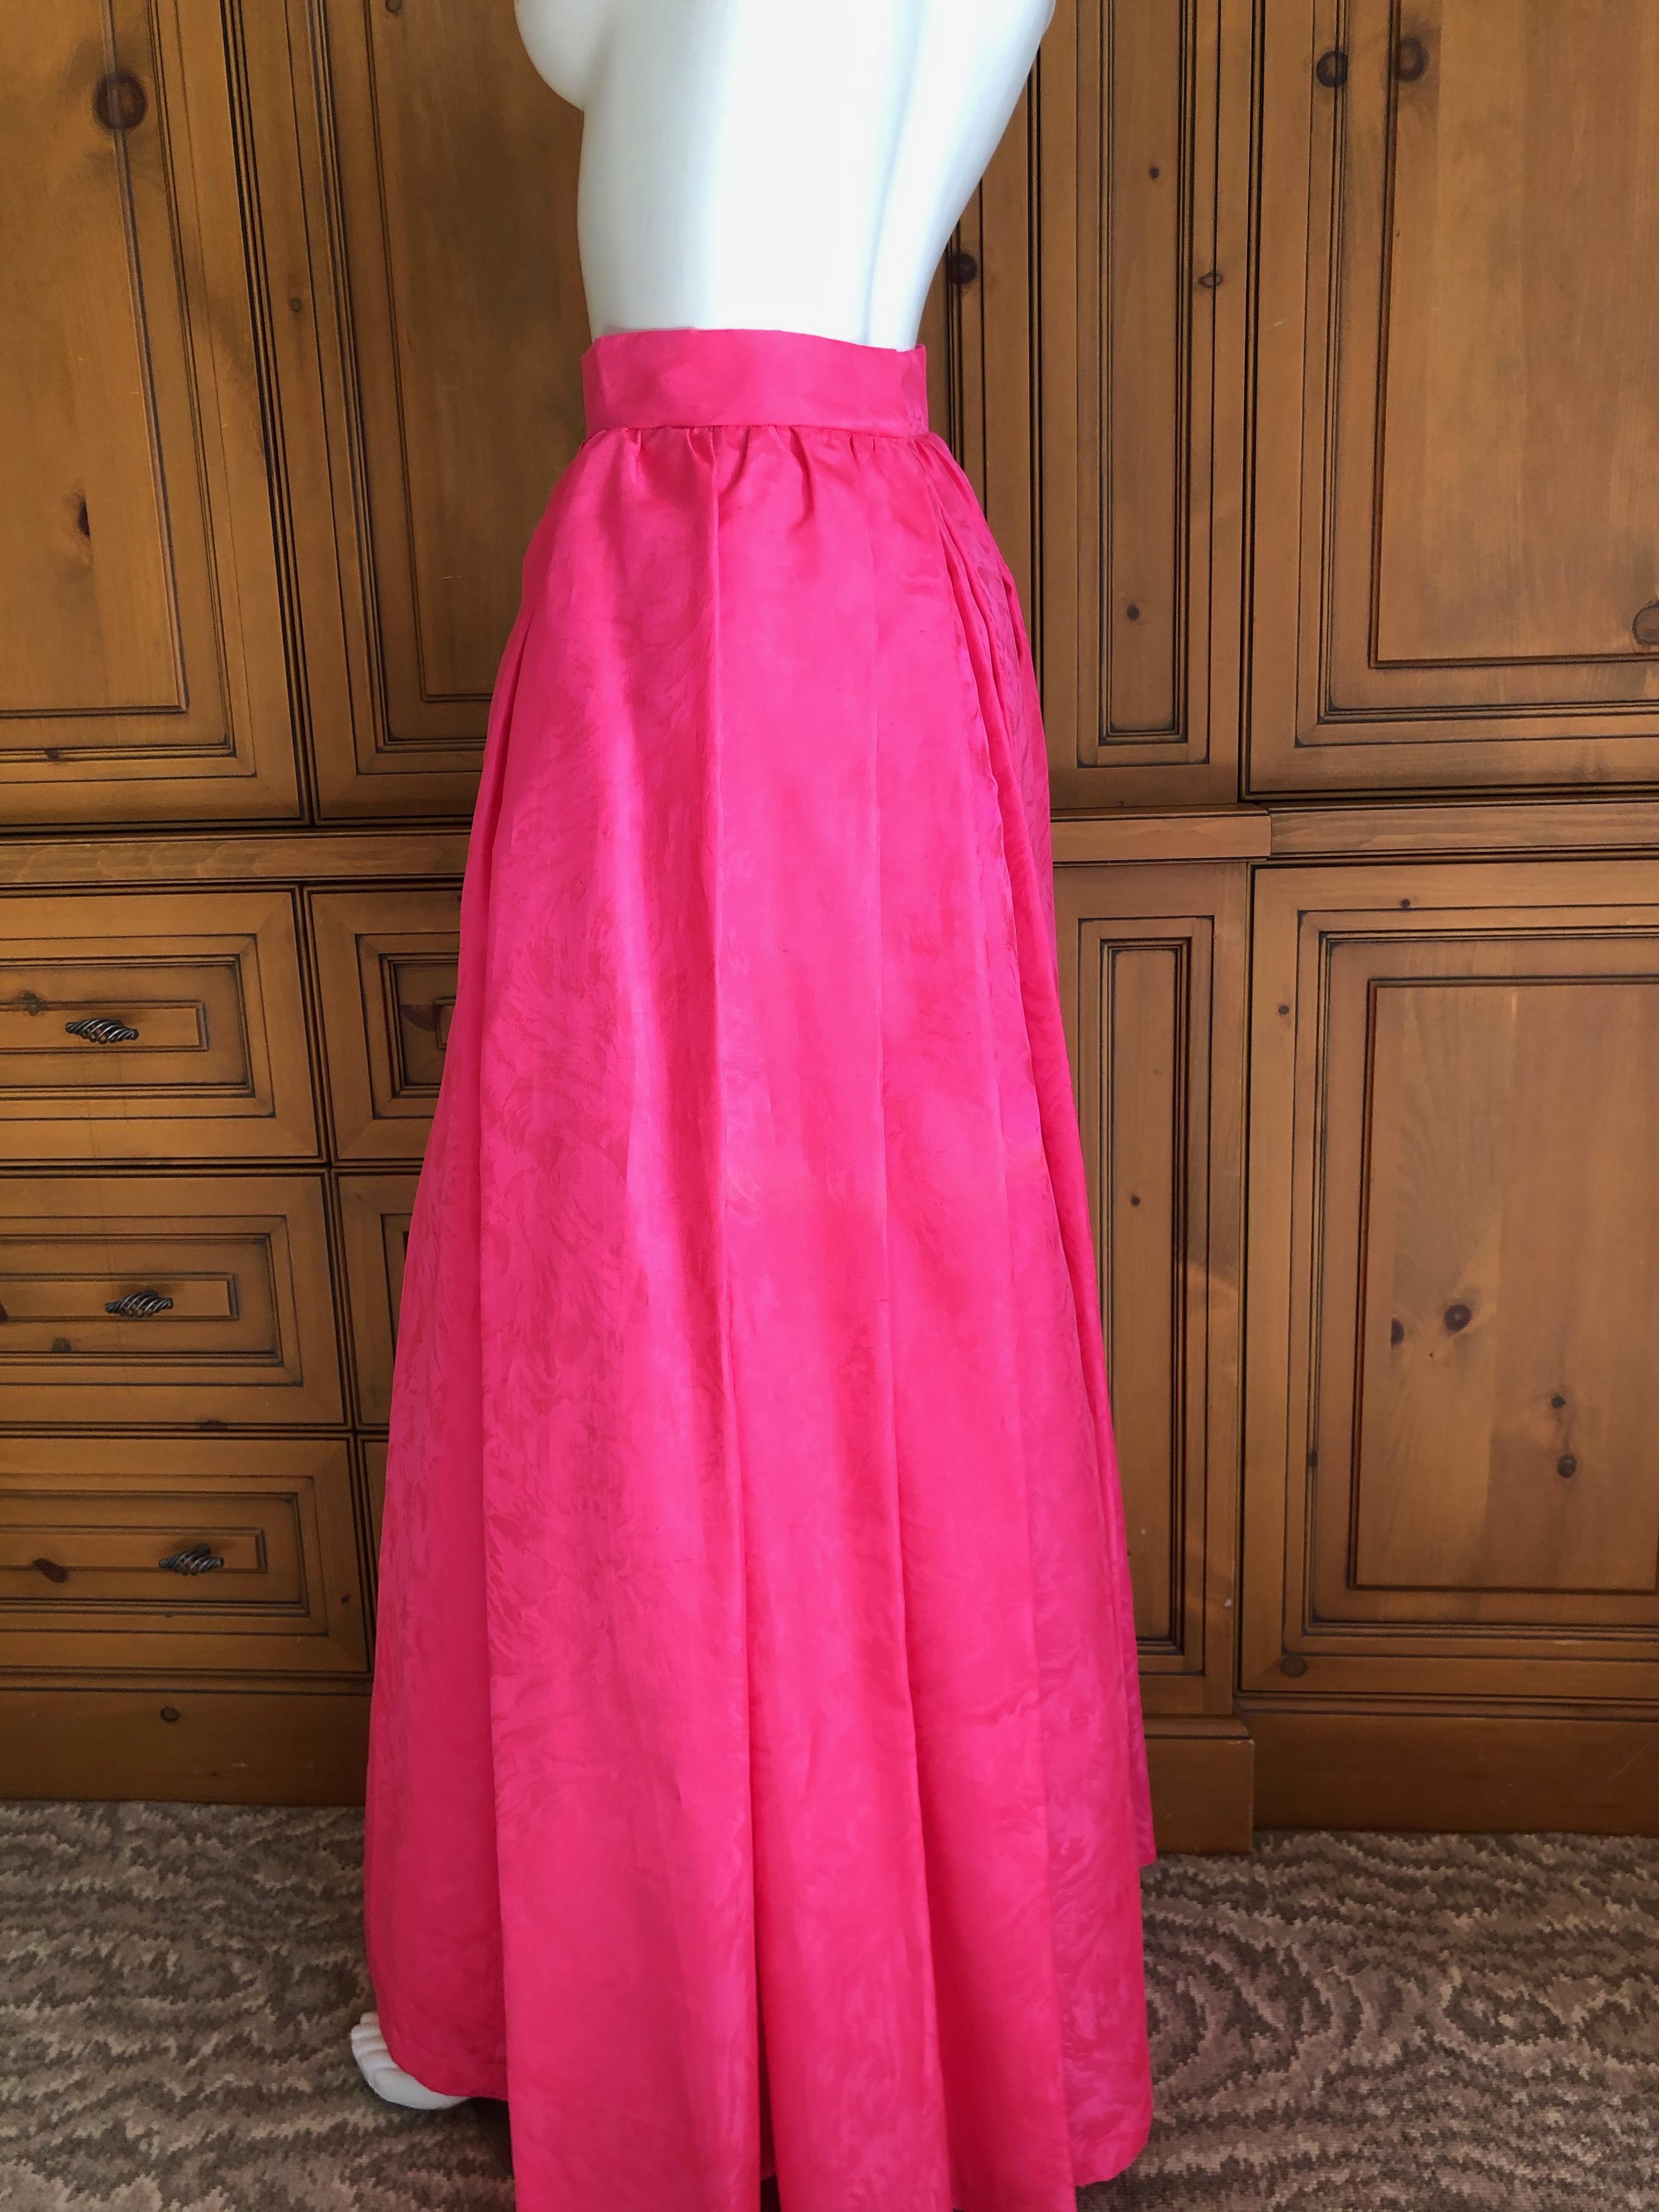 Yves Saint Laurent Rive Gauche Vintage 70's Pink Silk Faille Ball Skirt Pockets For Sale 1